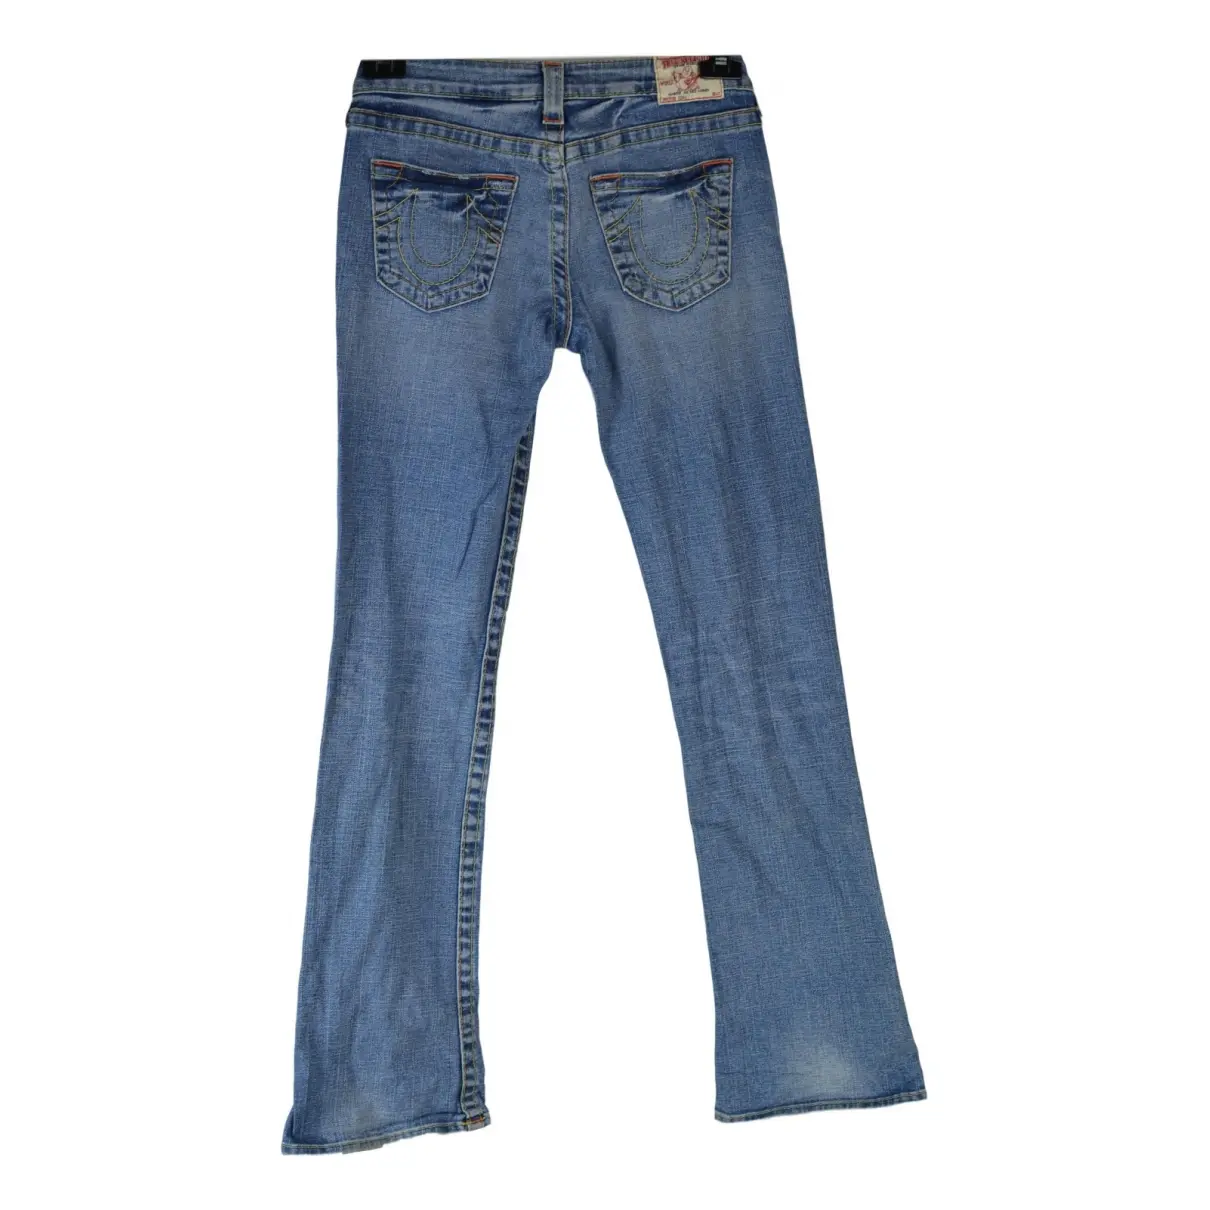 Buy True Religion Blue Cotton - elasthane Jeans online